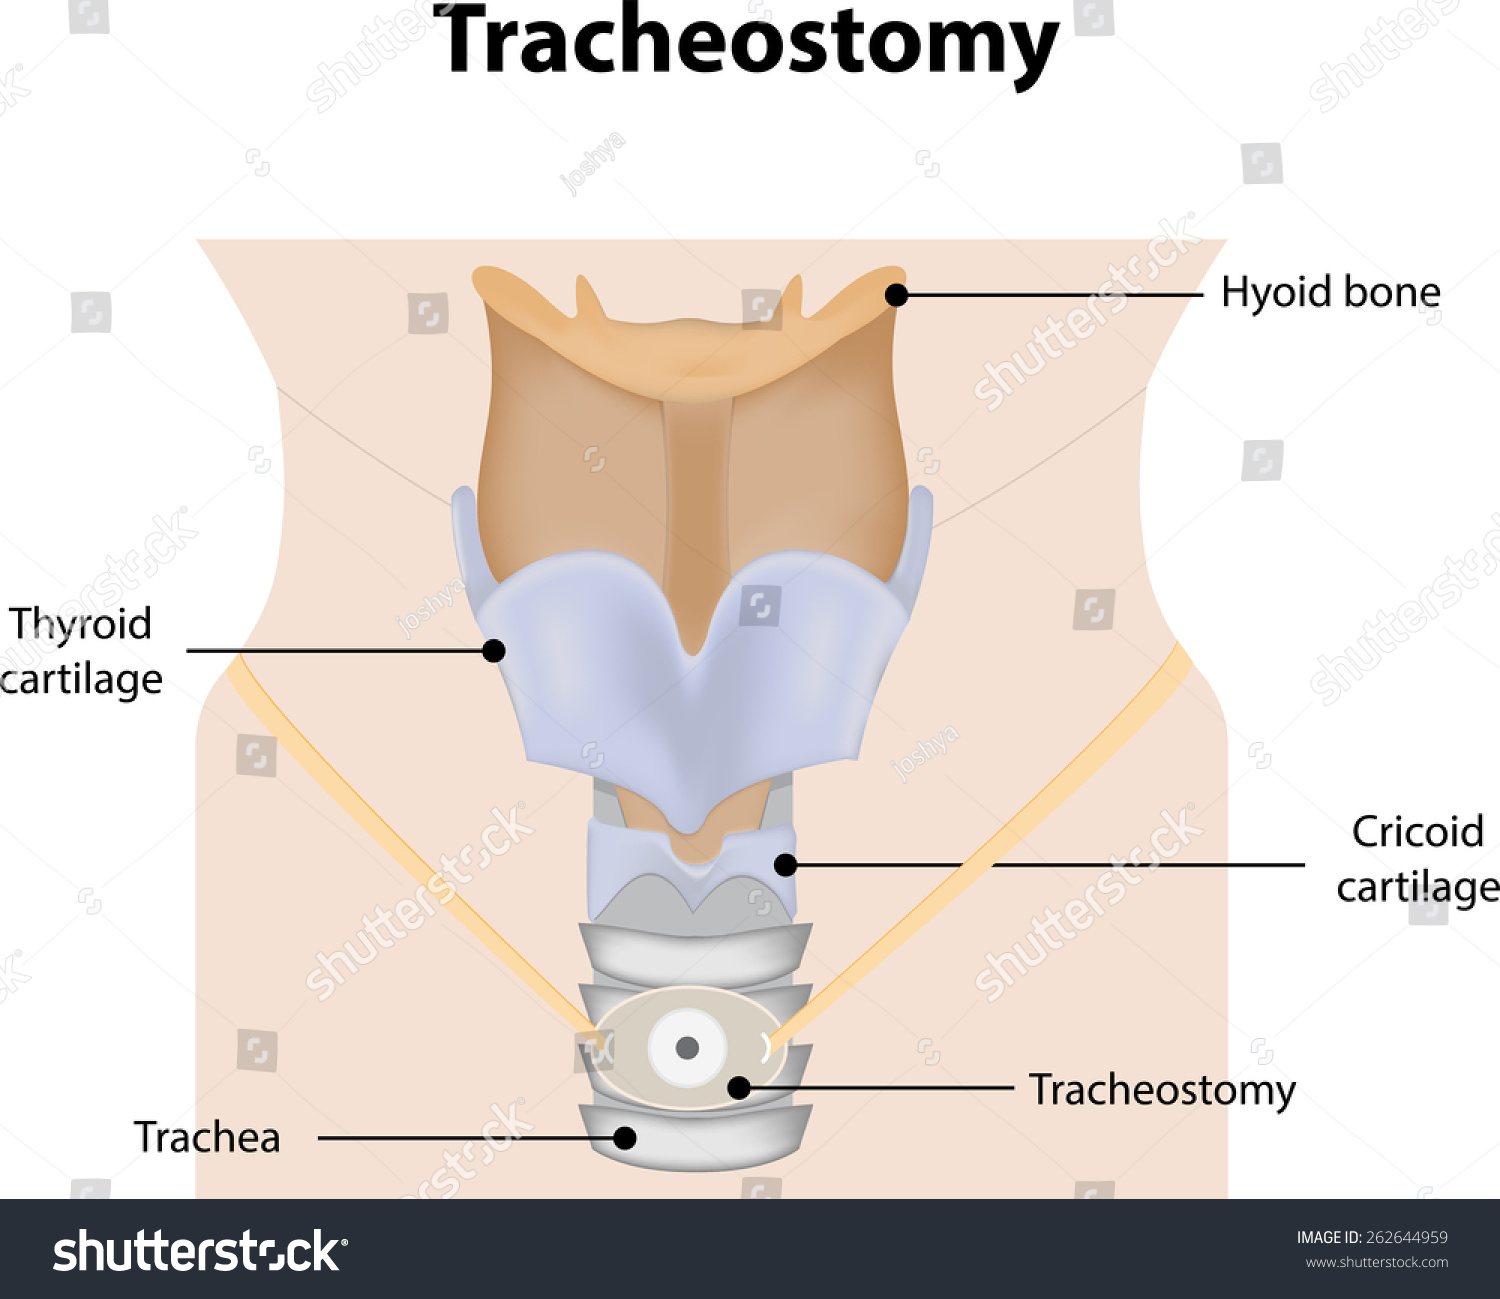 Tracheostomy Labeled Diagram Stock Illustration 262644959